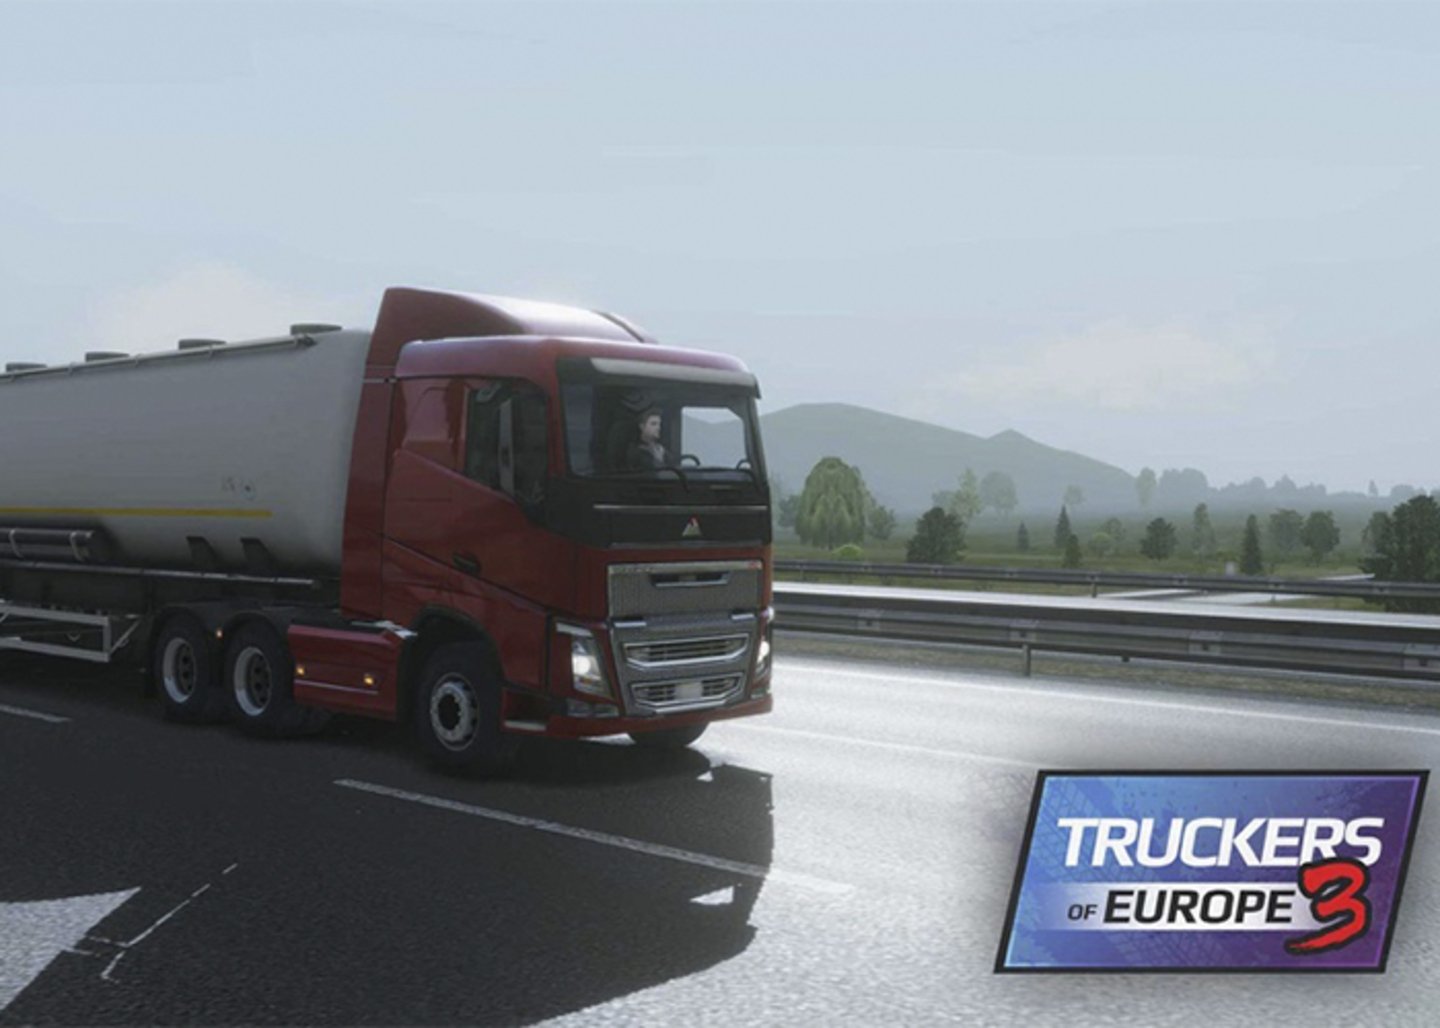 Explorando Europa sobre ruedas - Truckers of Europe 3